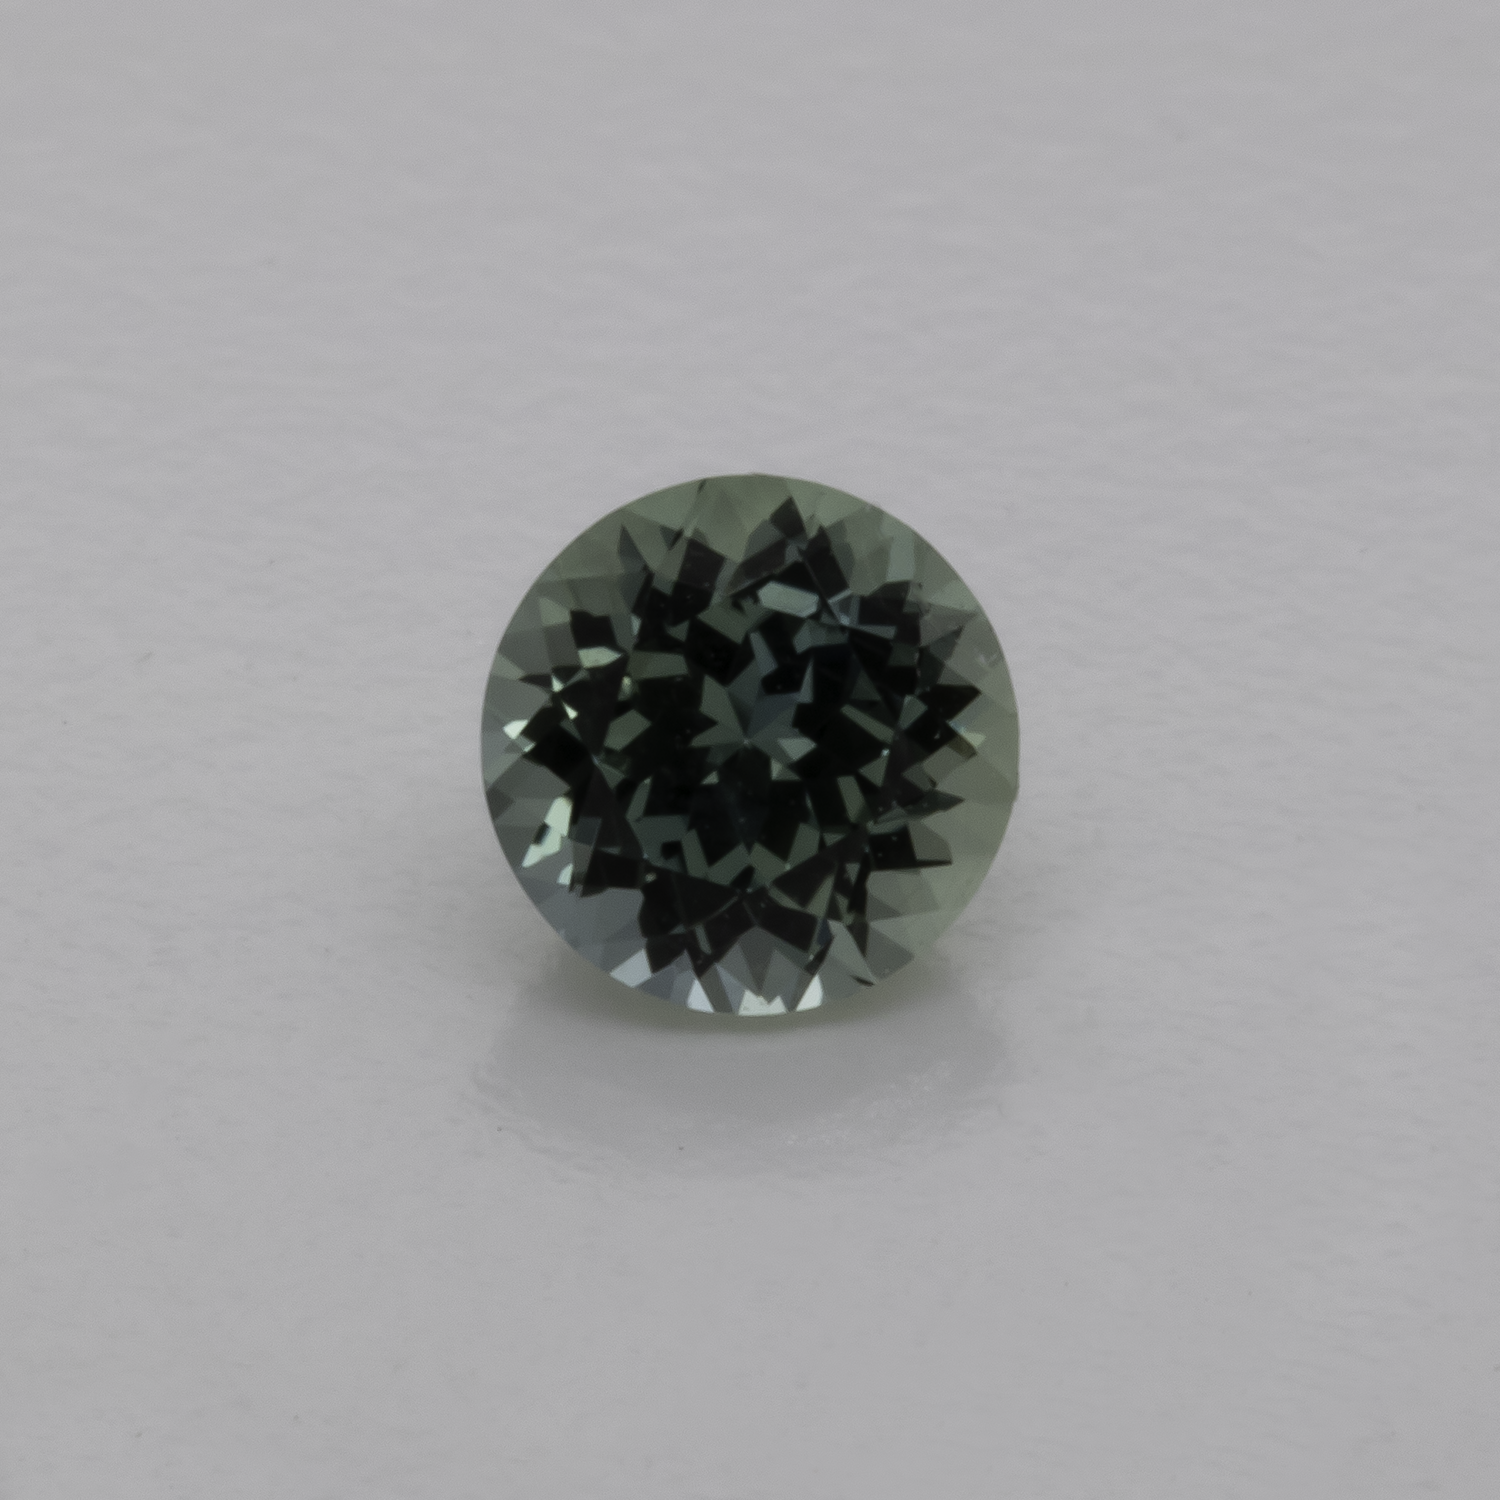 Saphir - blau/grün, rund, 4,1x4,1 mm, 0,35 cts, Nr. XSR11205